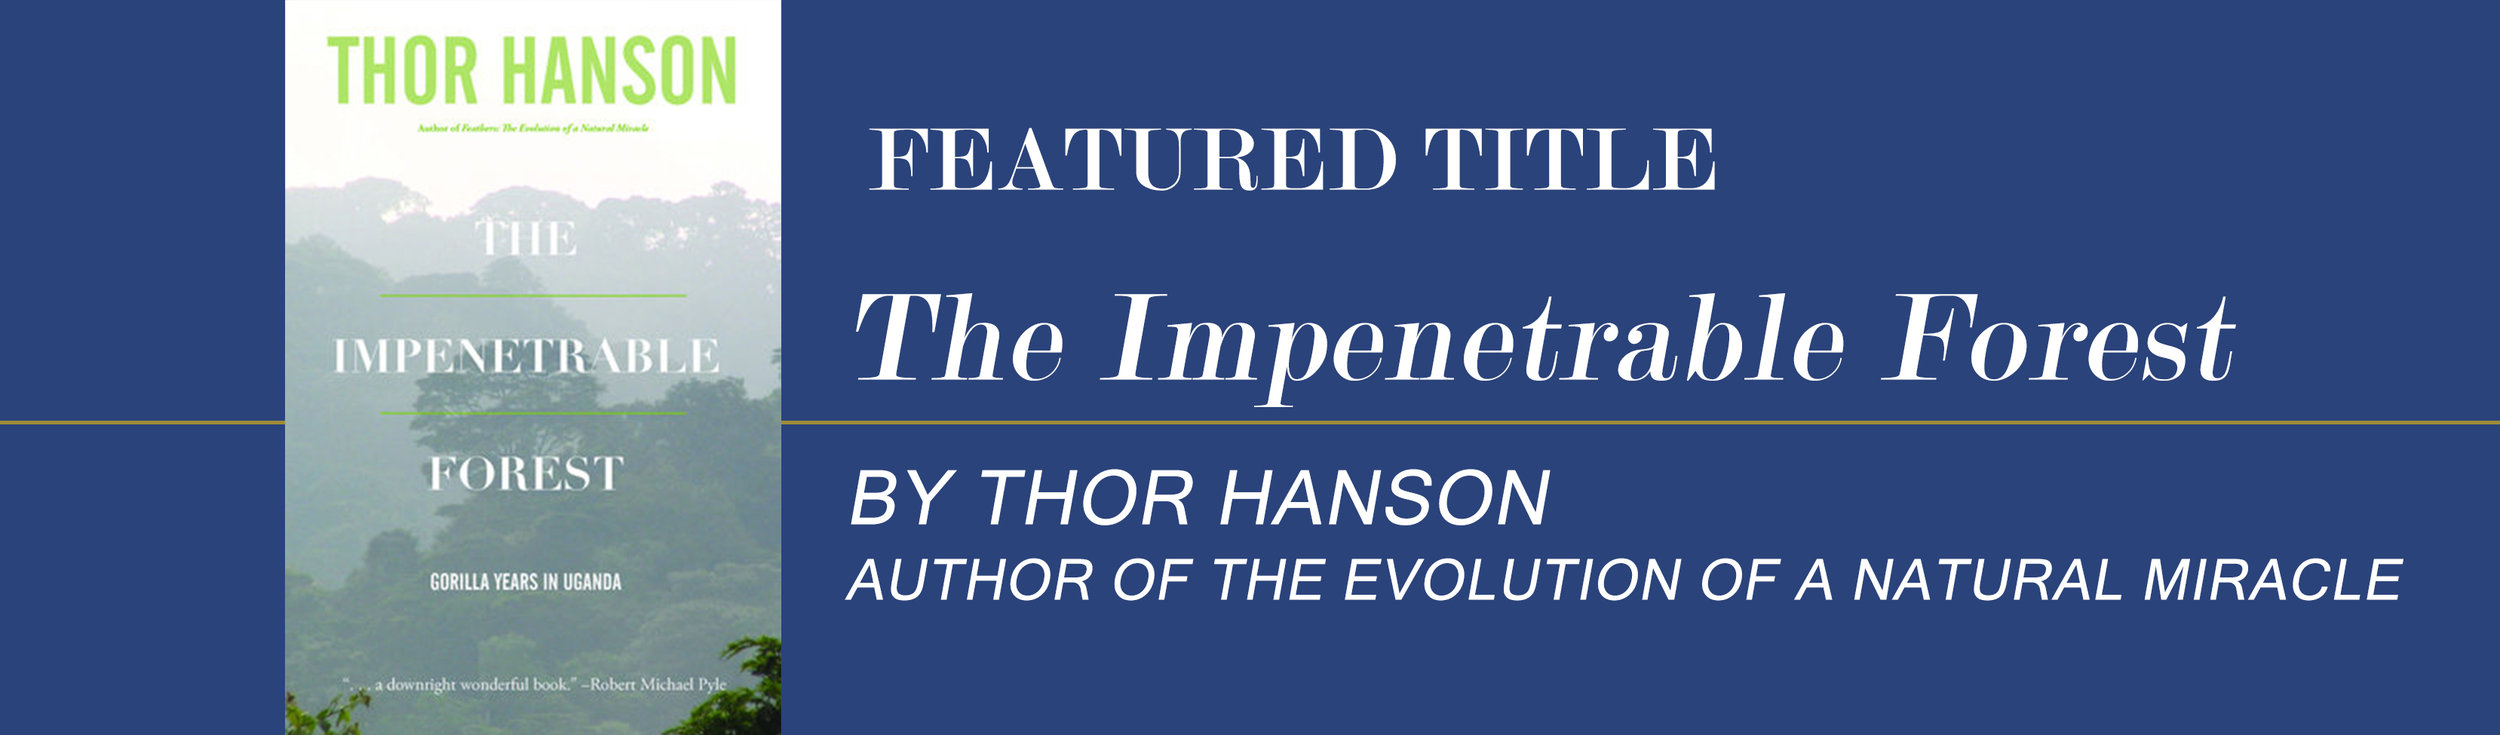 Thor Hanson Featured Book Template.jpg